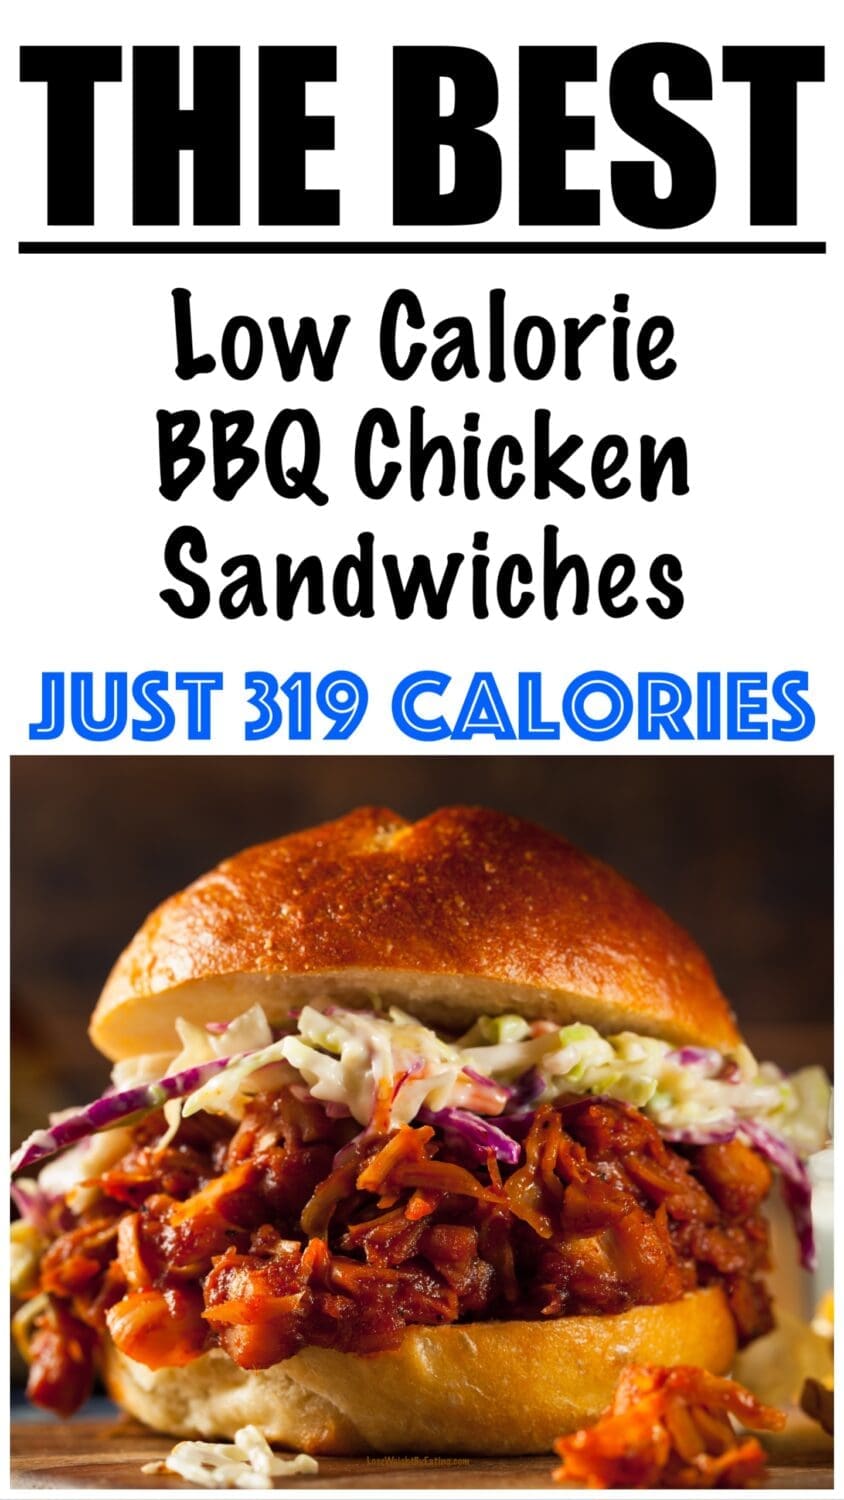 Low Calorie BBQ Chicken Sandwiches